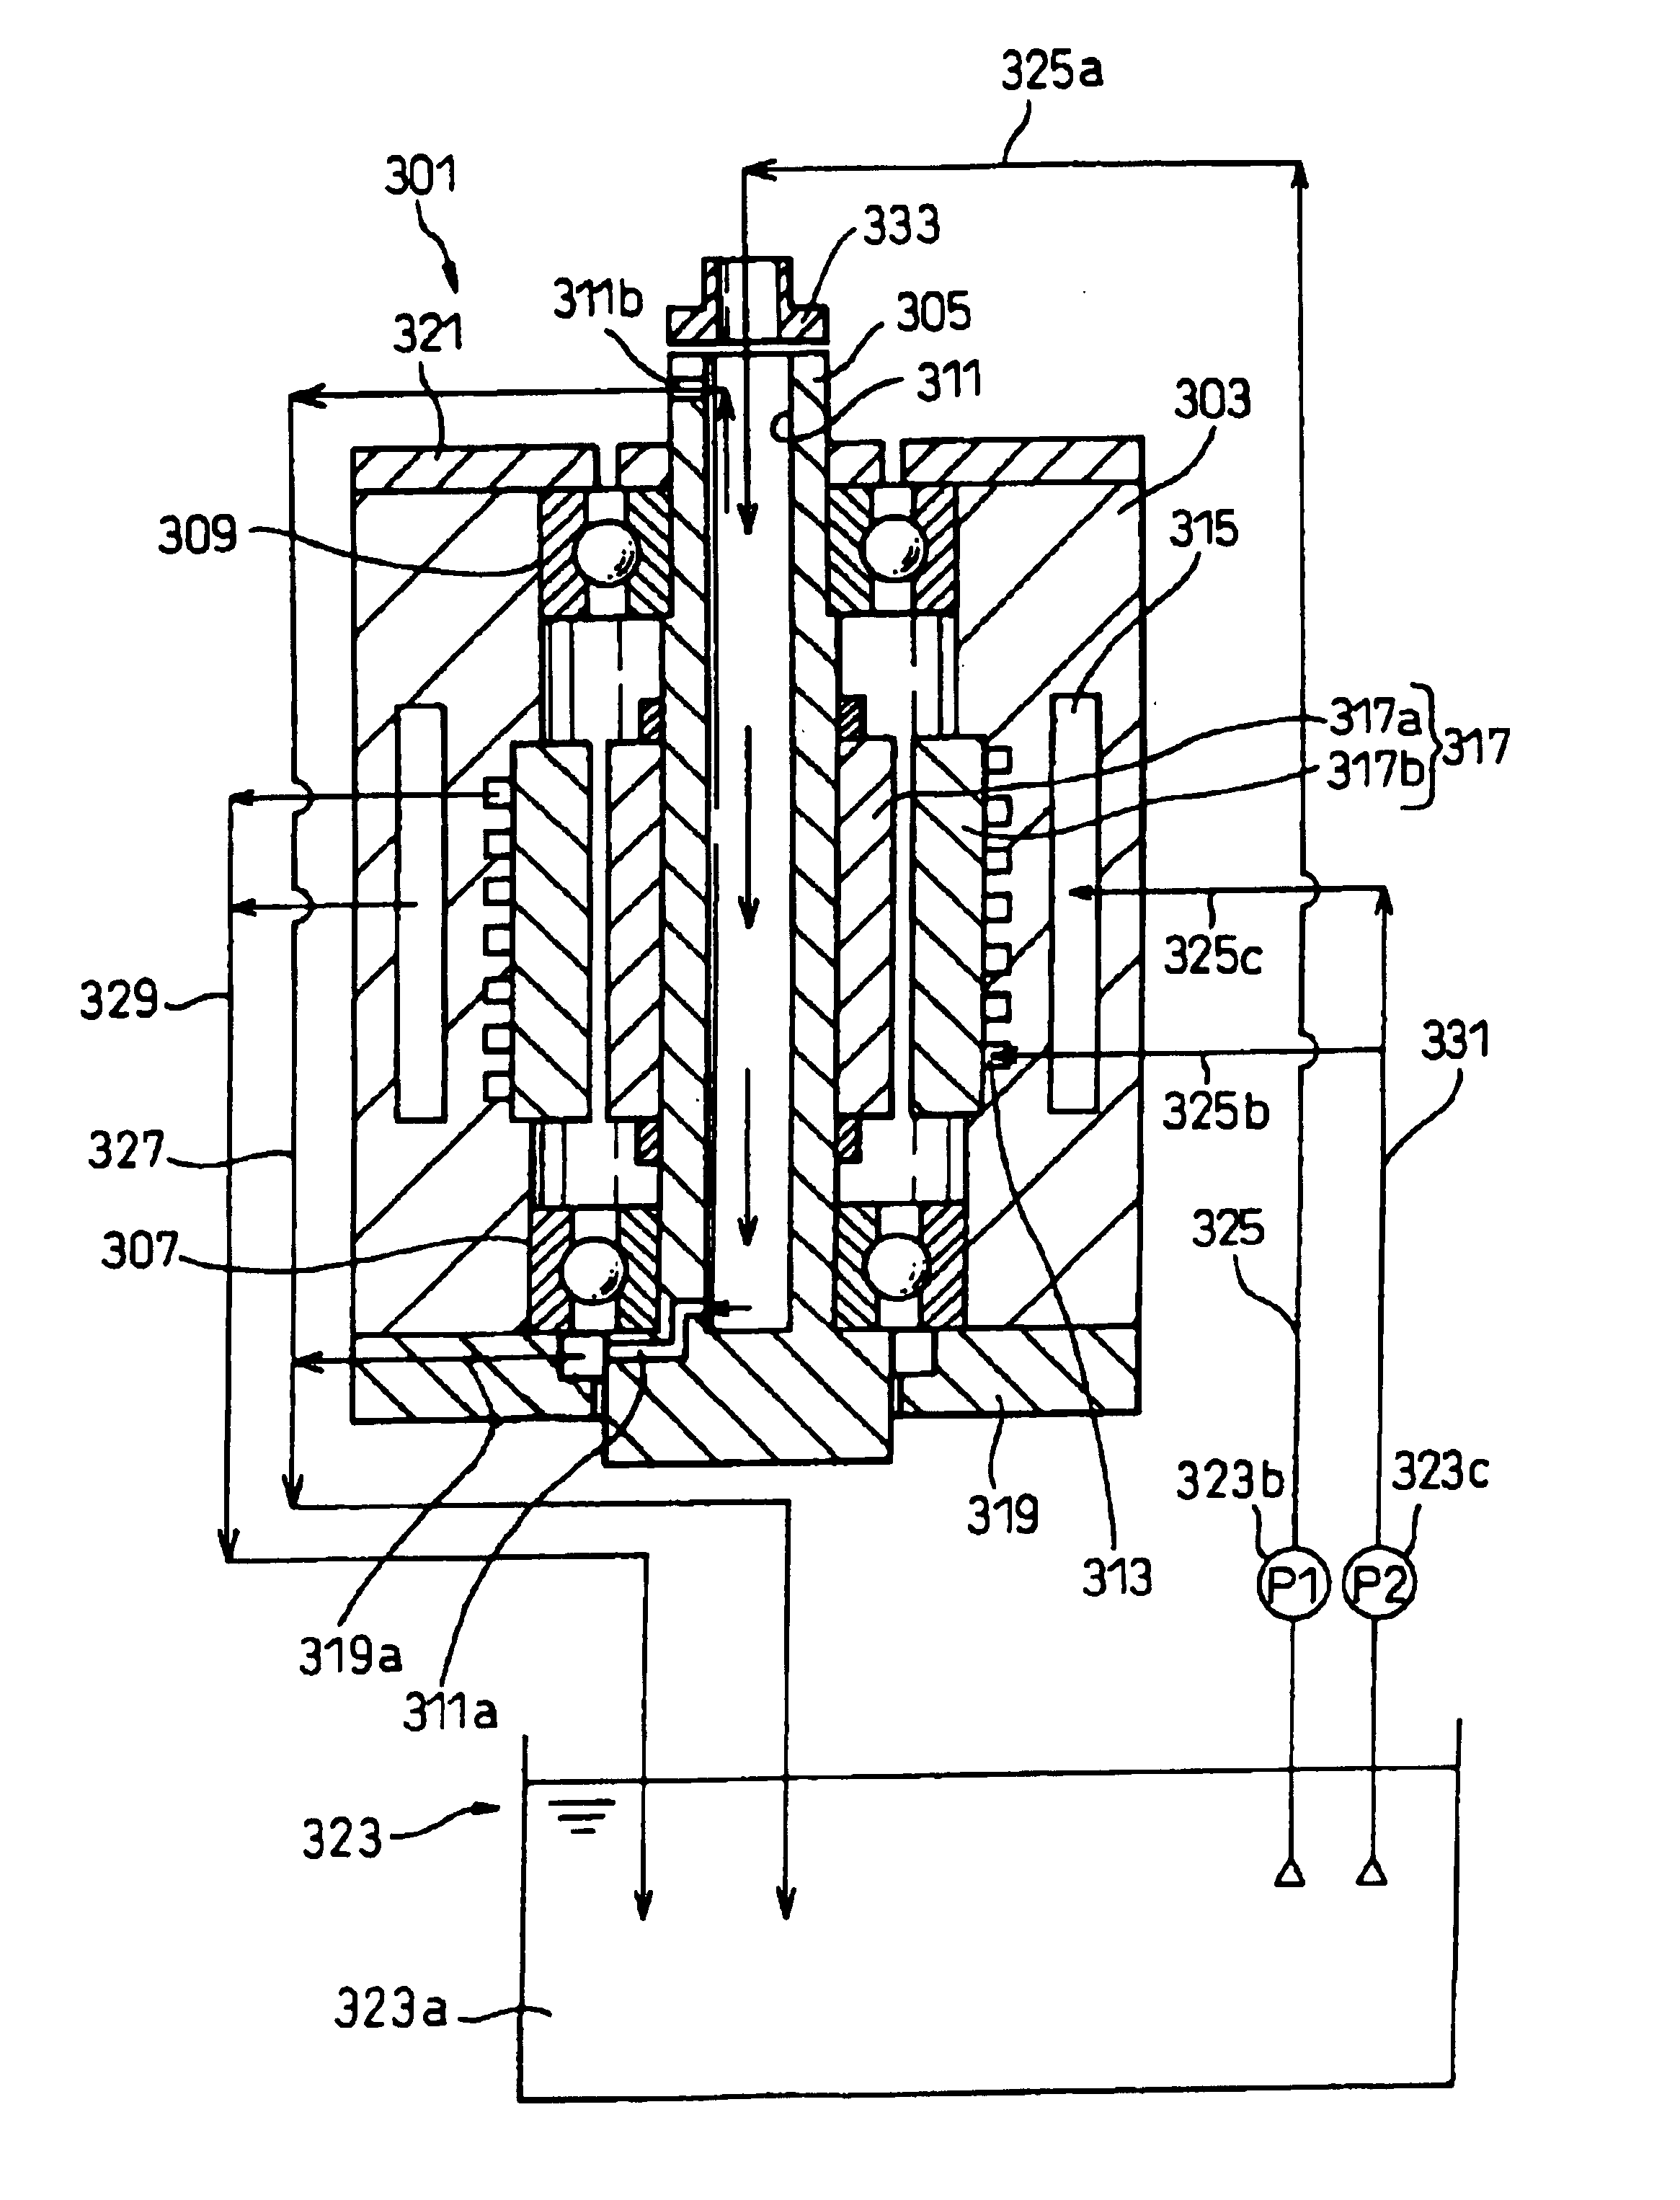 Rotating shaft apparatus